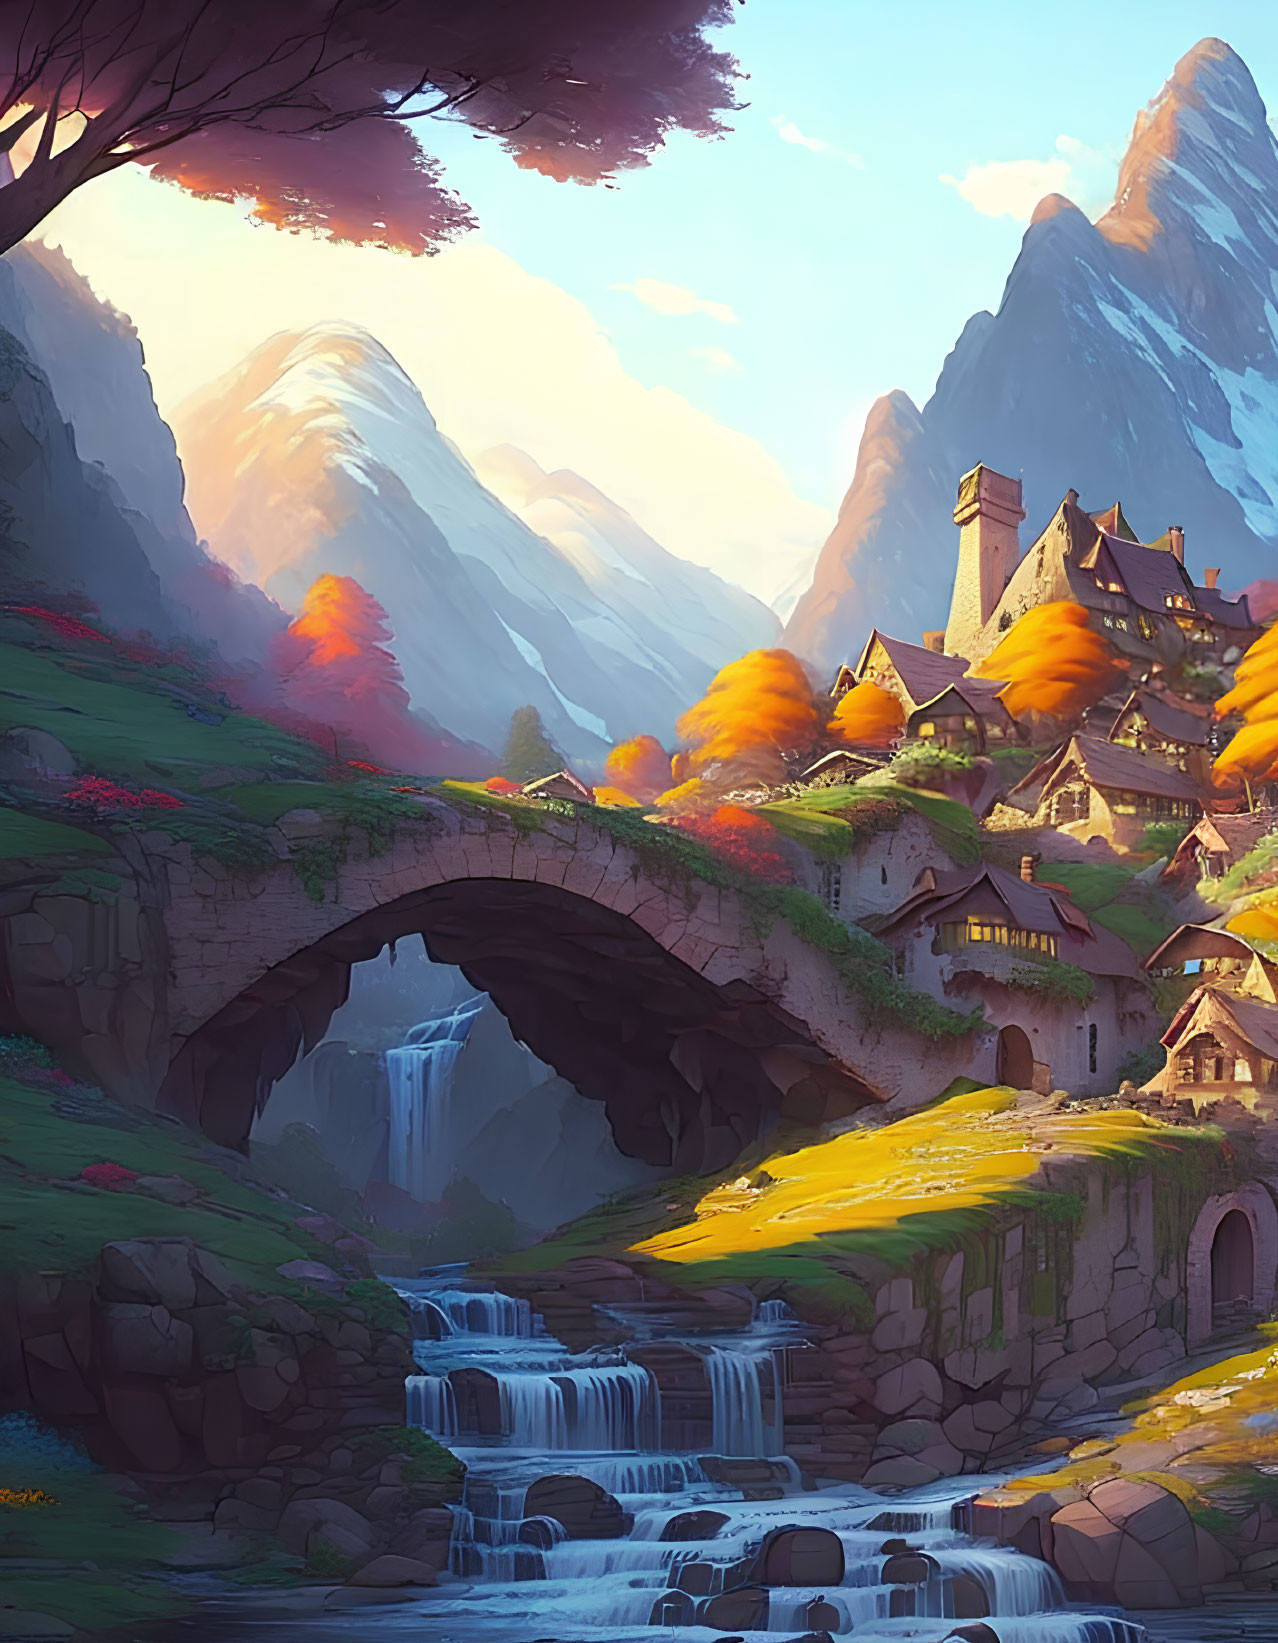 Scenic fantasy village with stone houses, bridge, waterfall, mountains